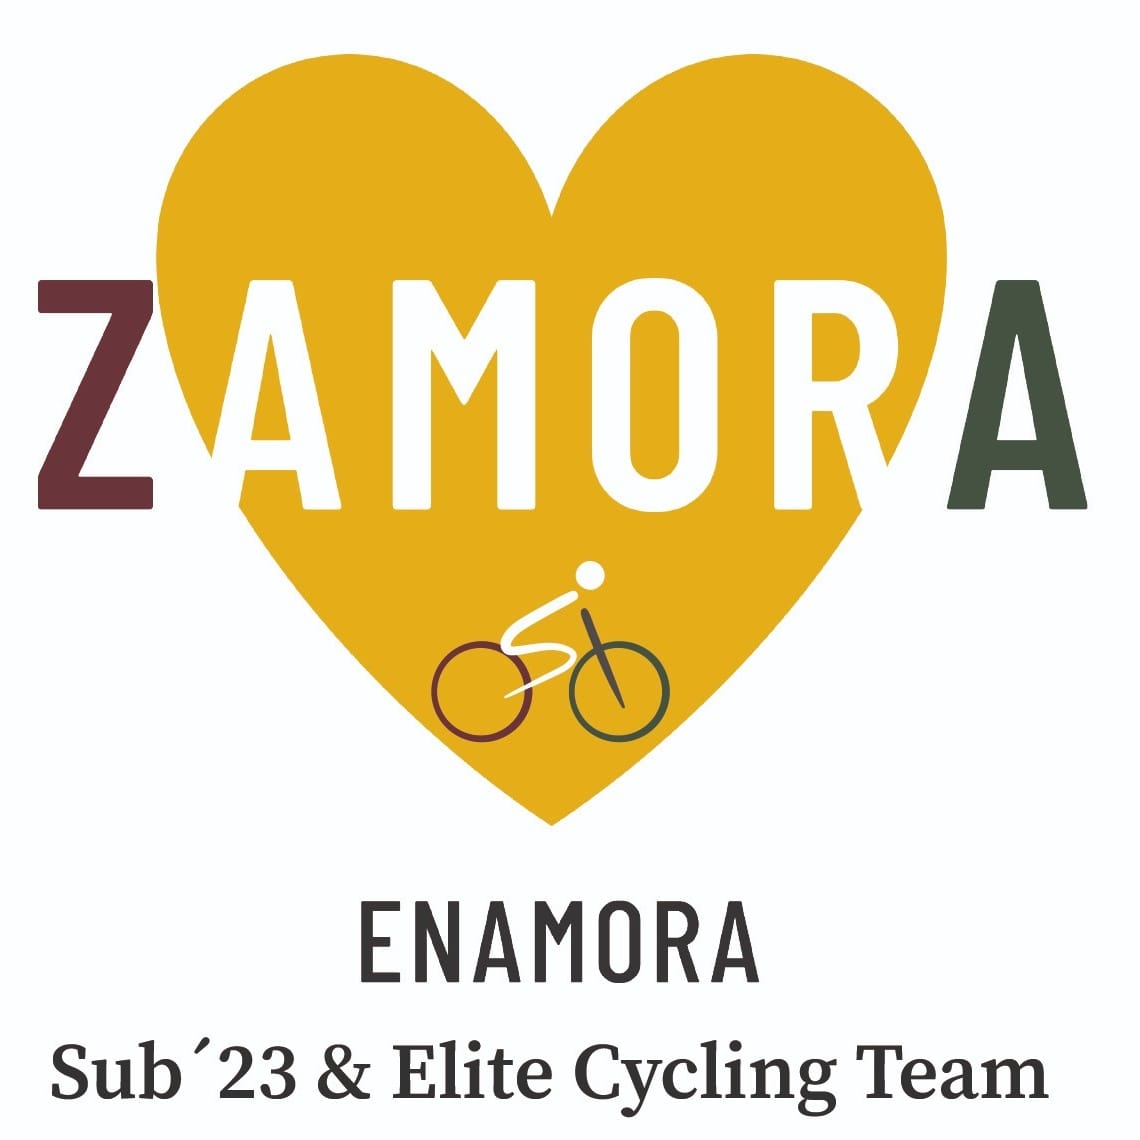 Team Zamora Enamora